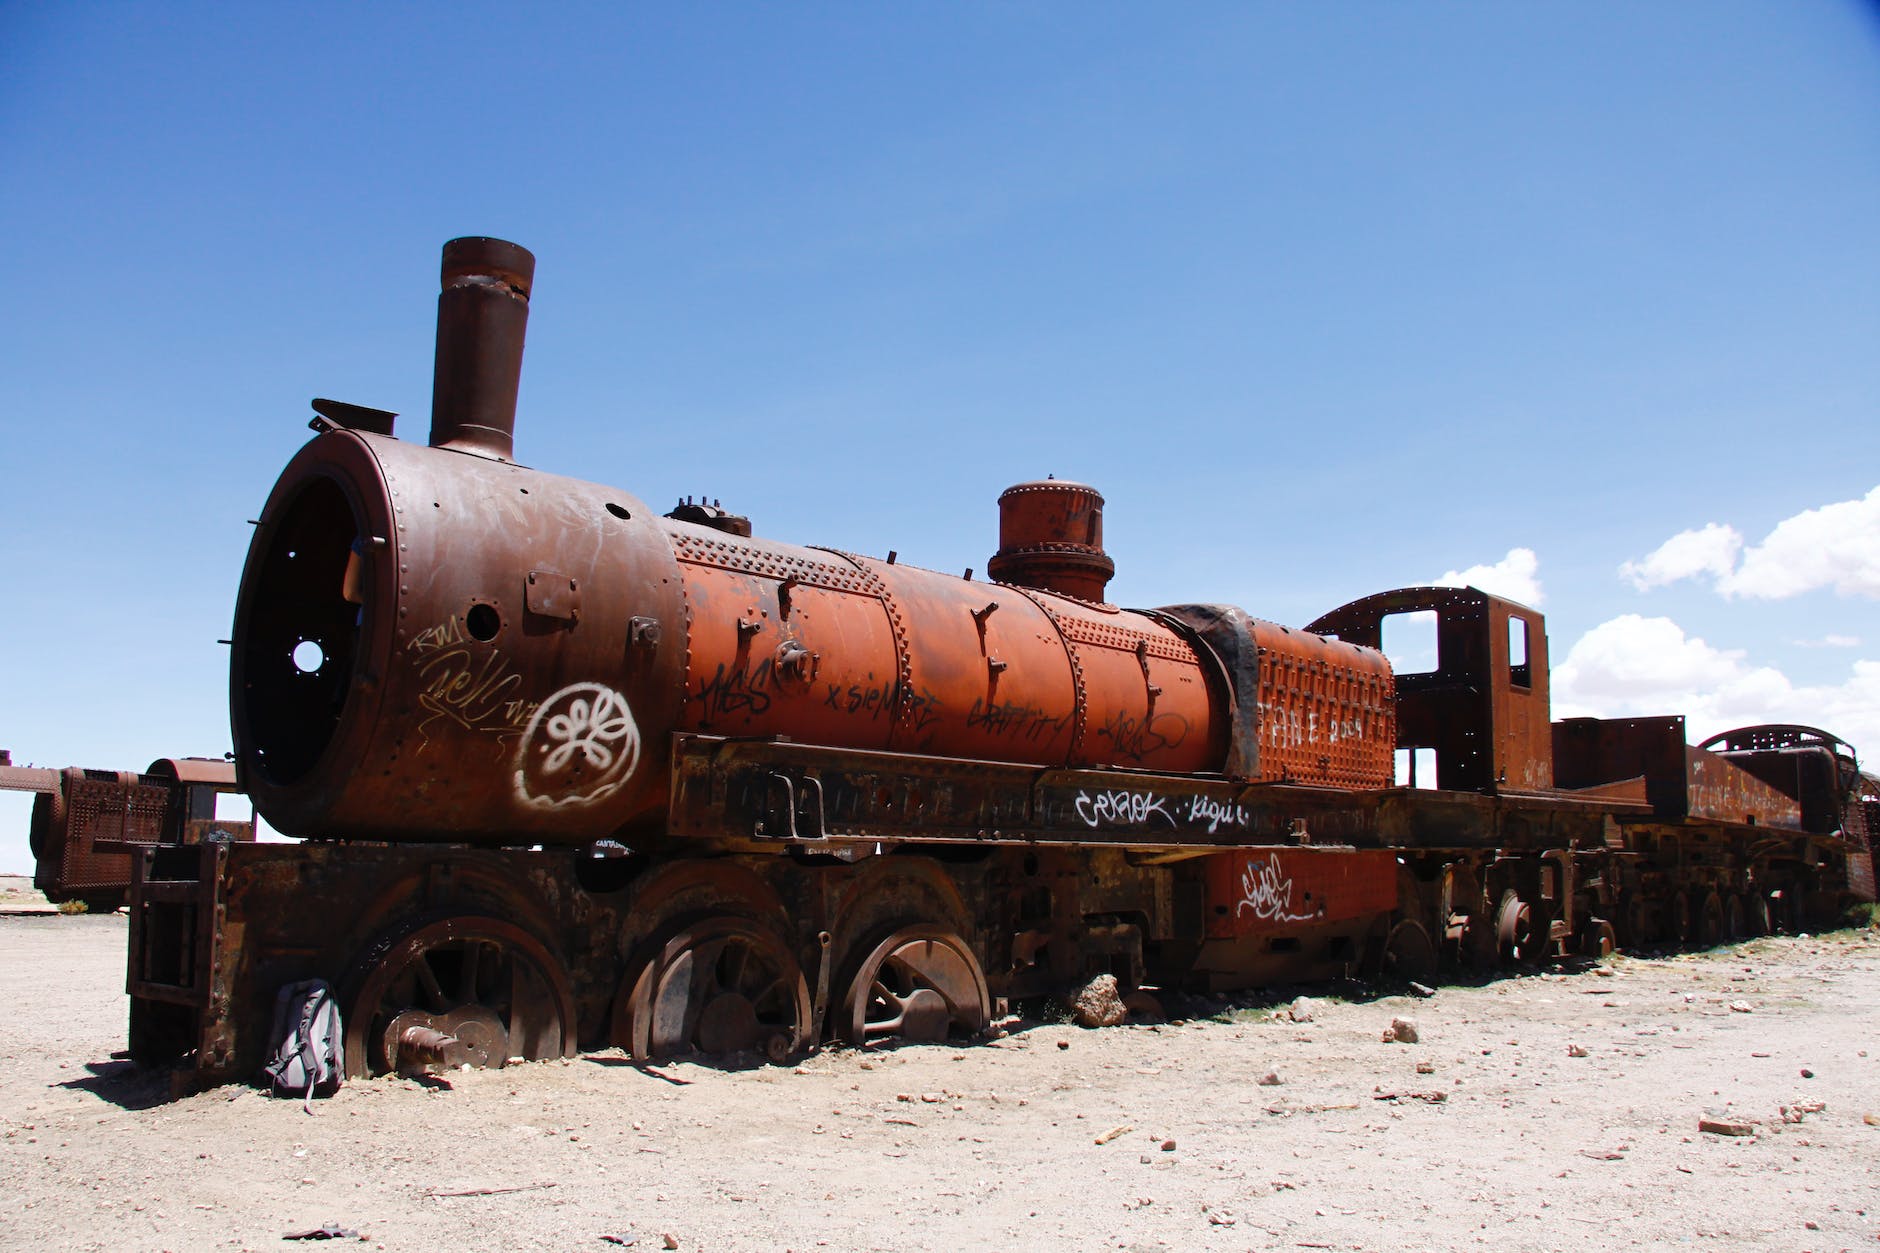 abandoned rusty train on a wasteland